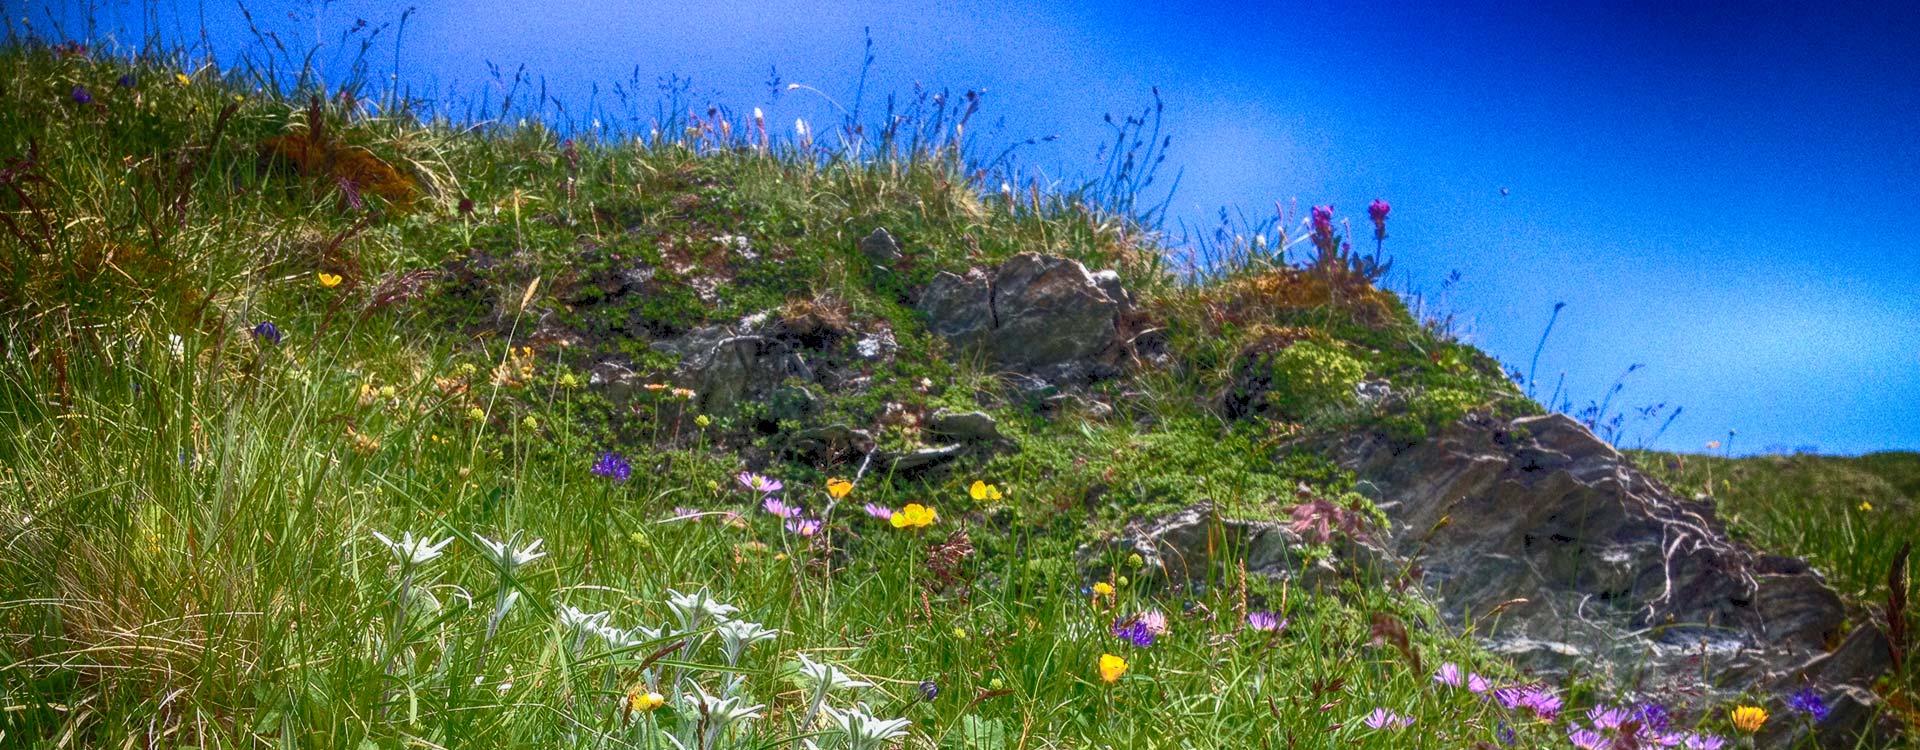 Blumenwiese/Edelweiss